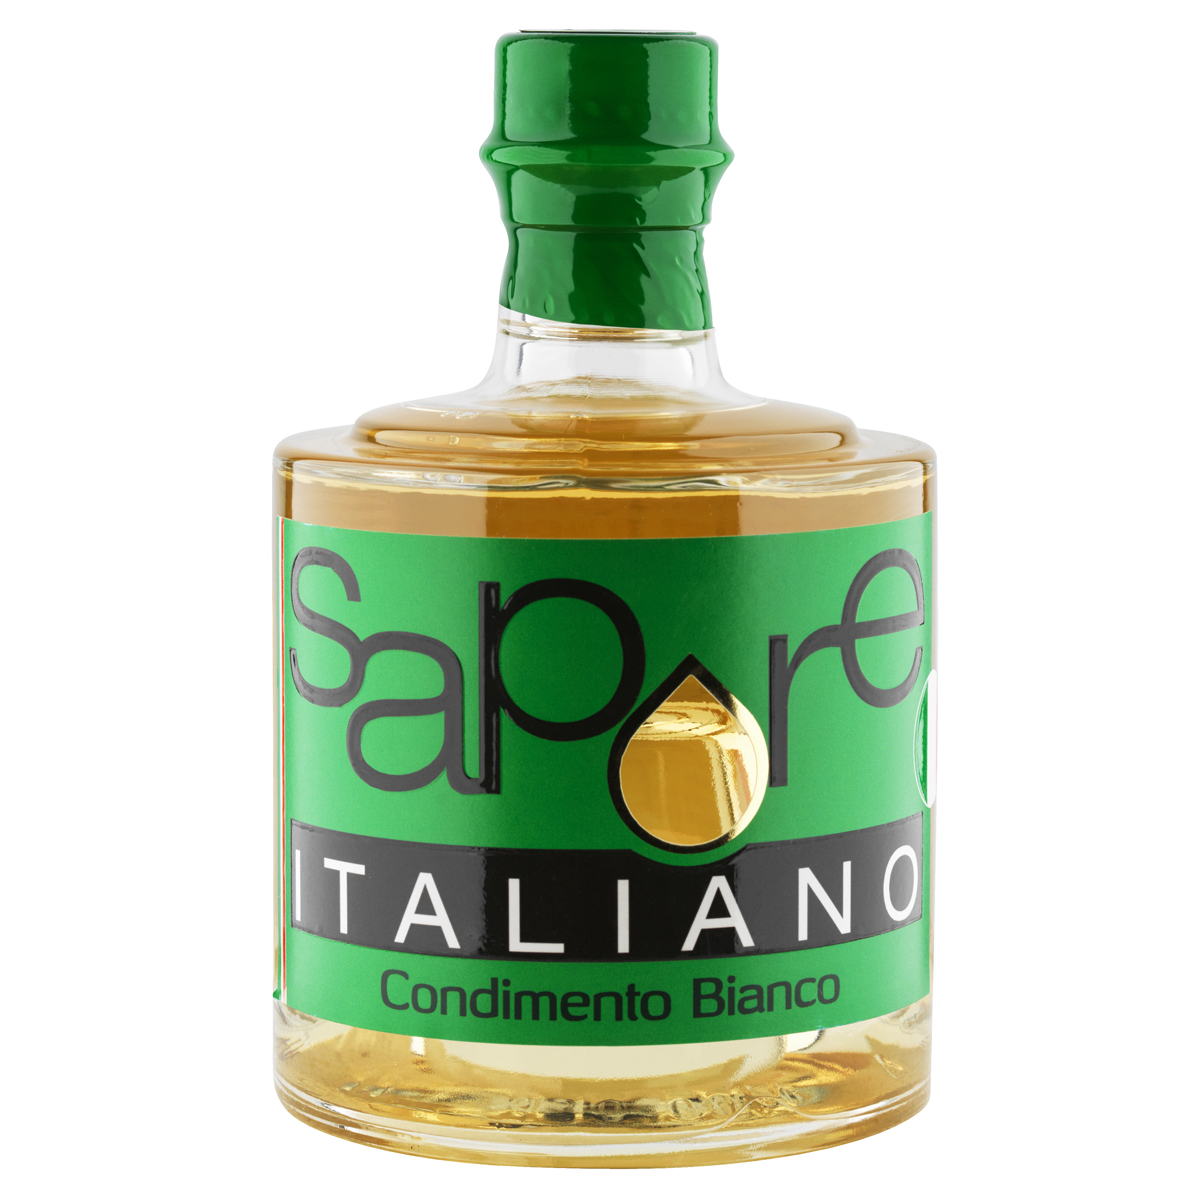 Sapore - Condimento Green Label Vinäger